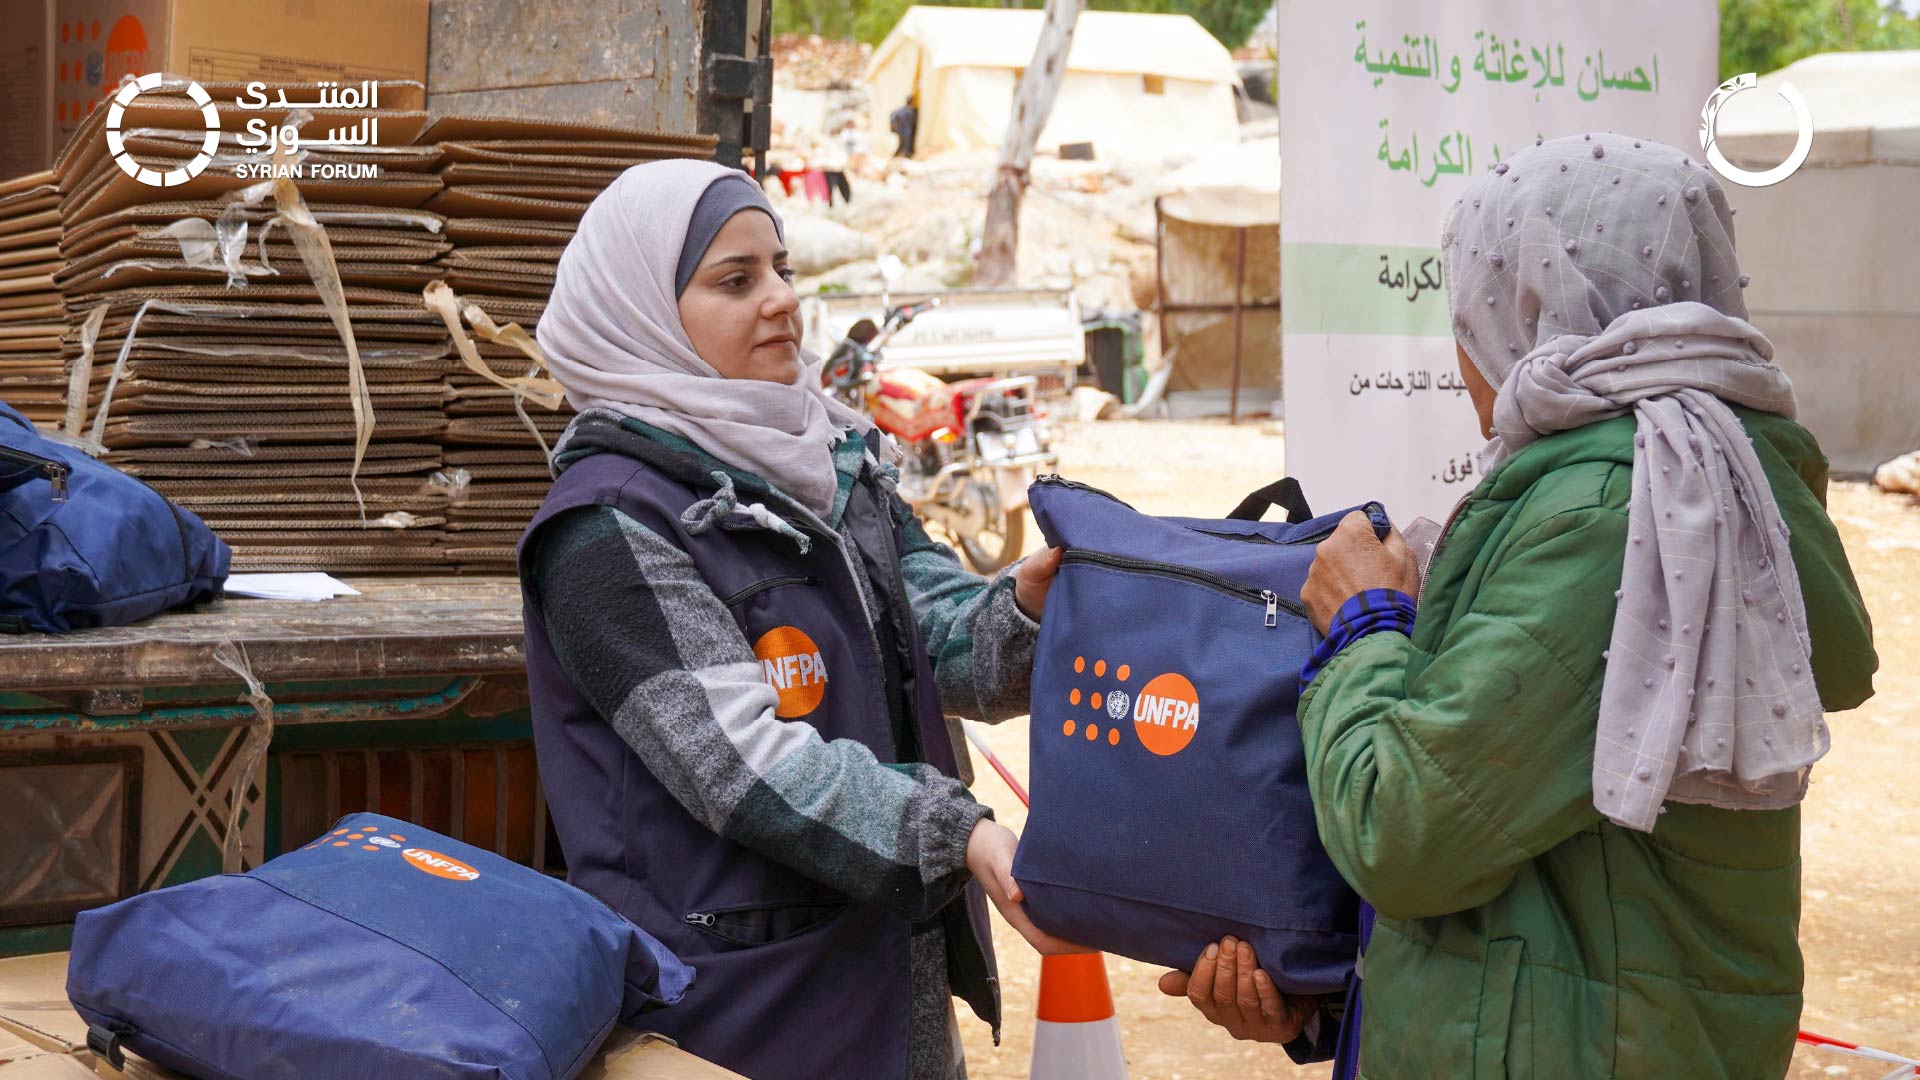 (English) Distribution of Personal Hygiene Kits in Al-Ziyara Camp, Ma’arrat Misrin